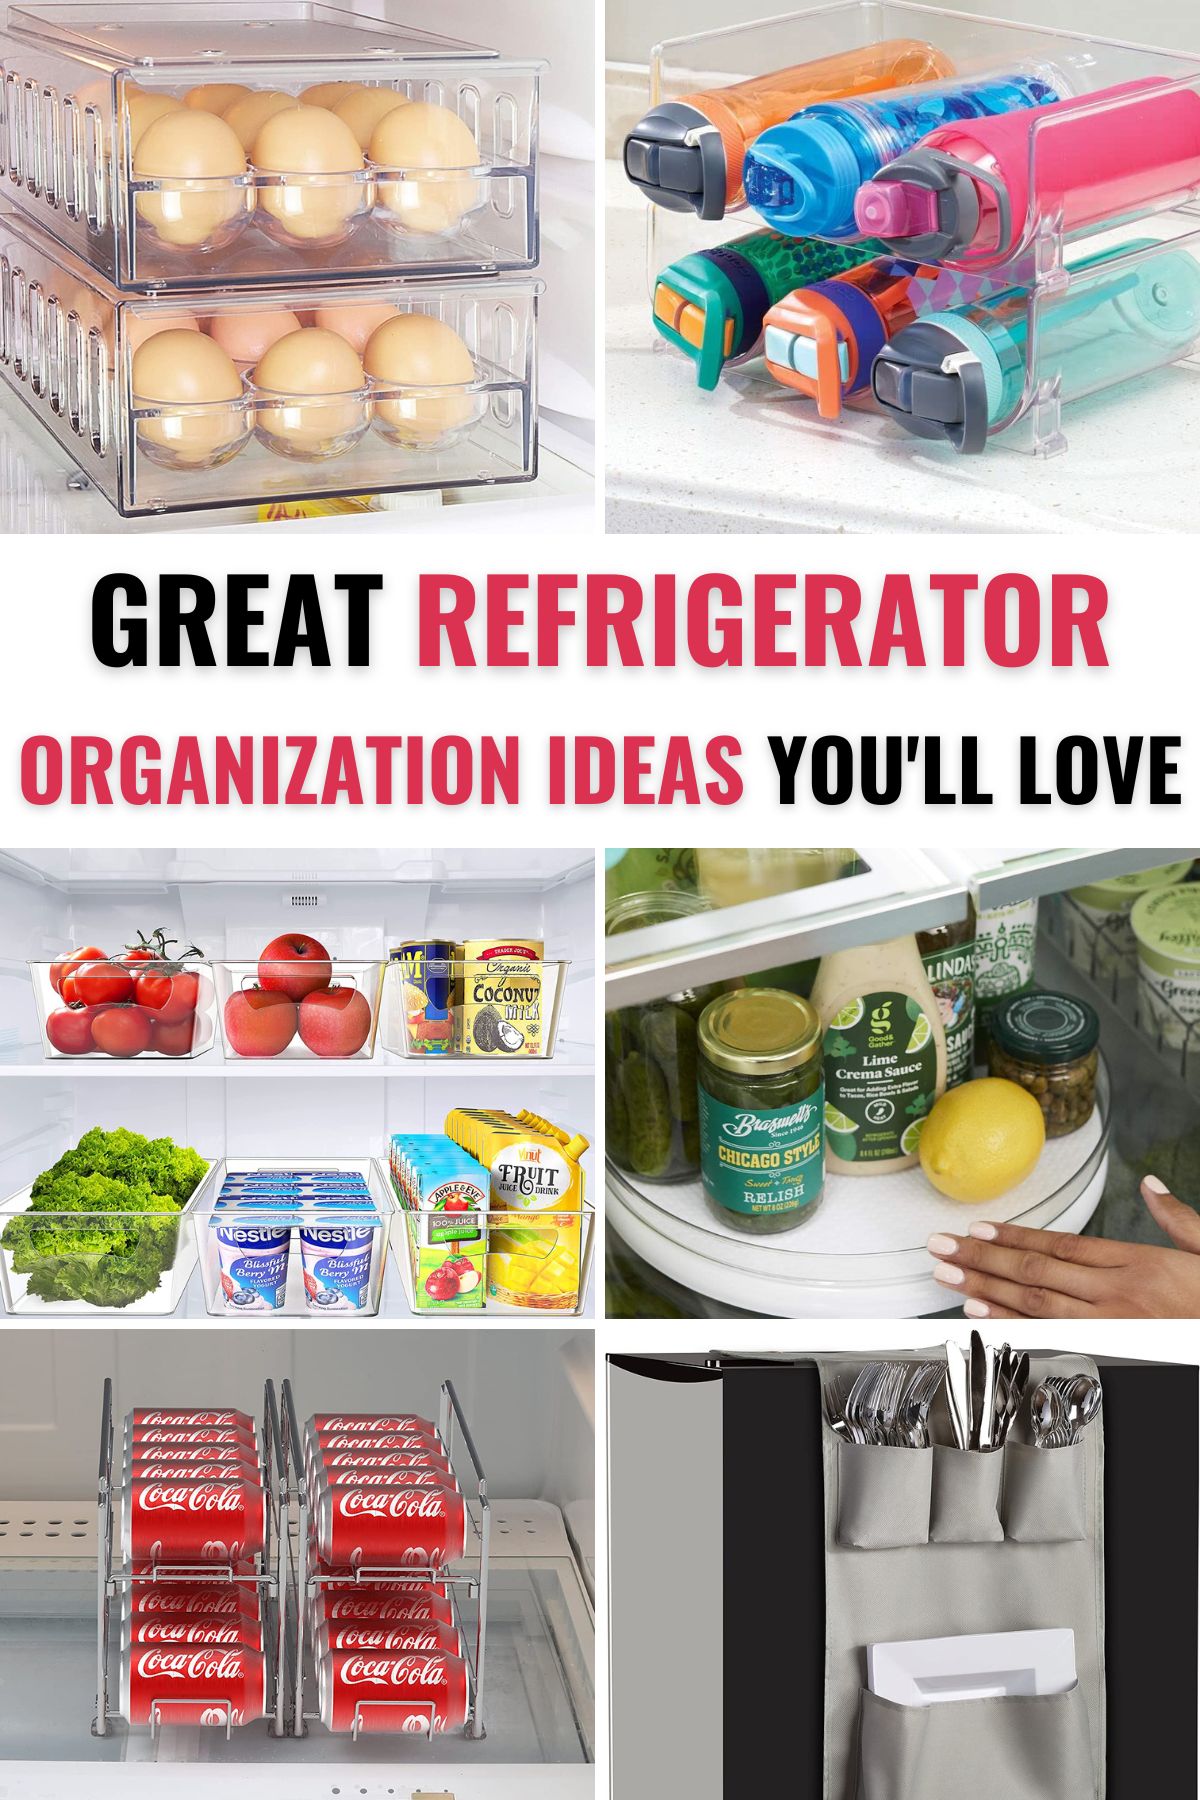 https://www.itisakeeper.com/wp-content/uploads/2022/11/Refrigerator-Organization-Ideas-HERO-IAK.jpg